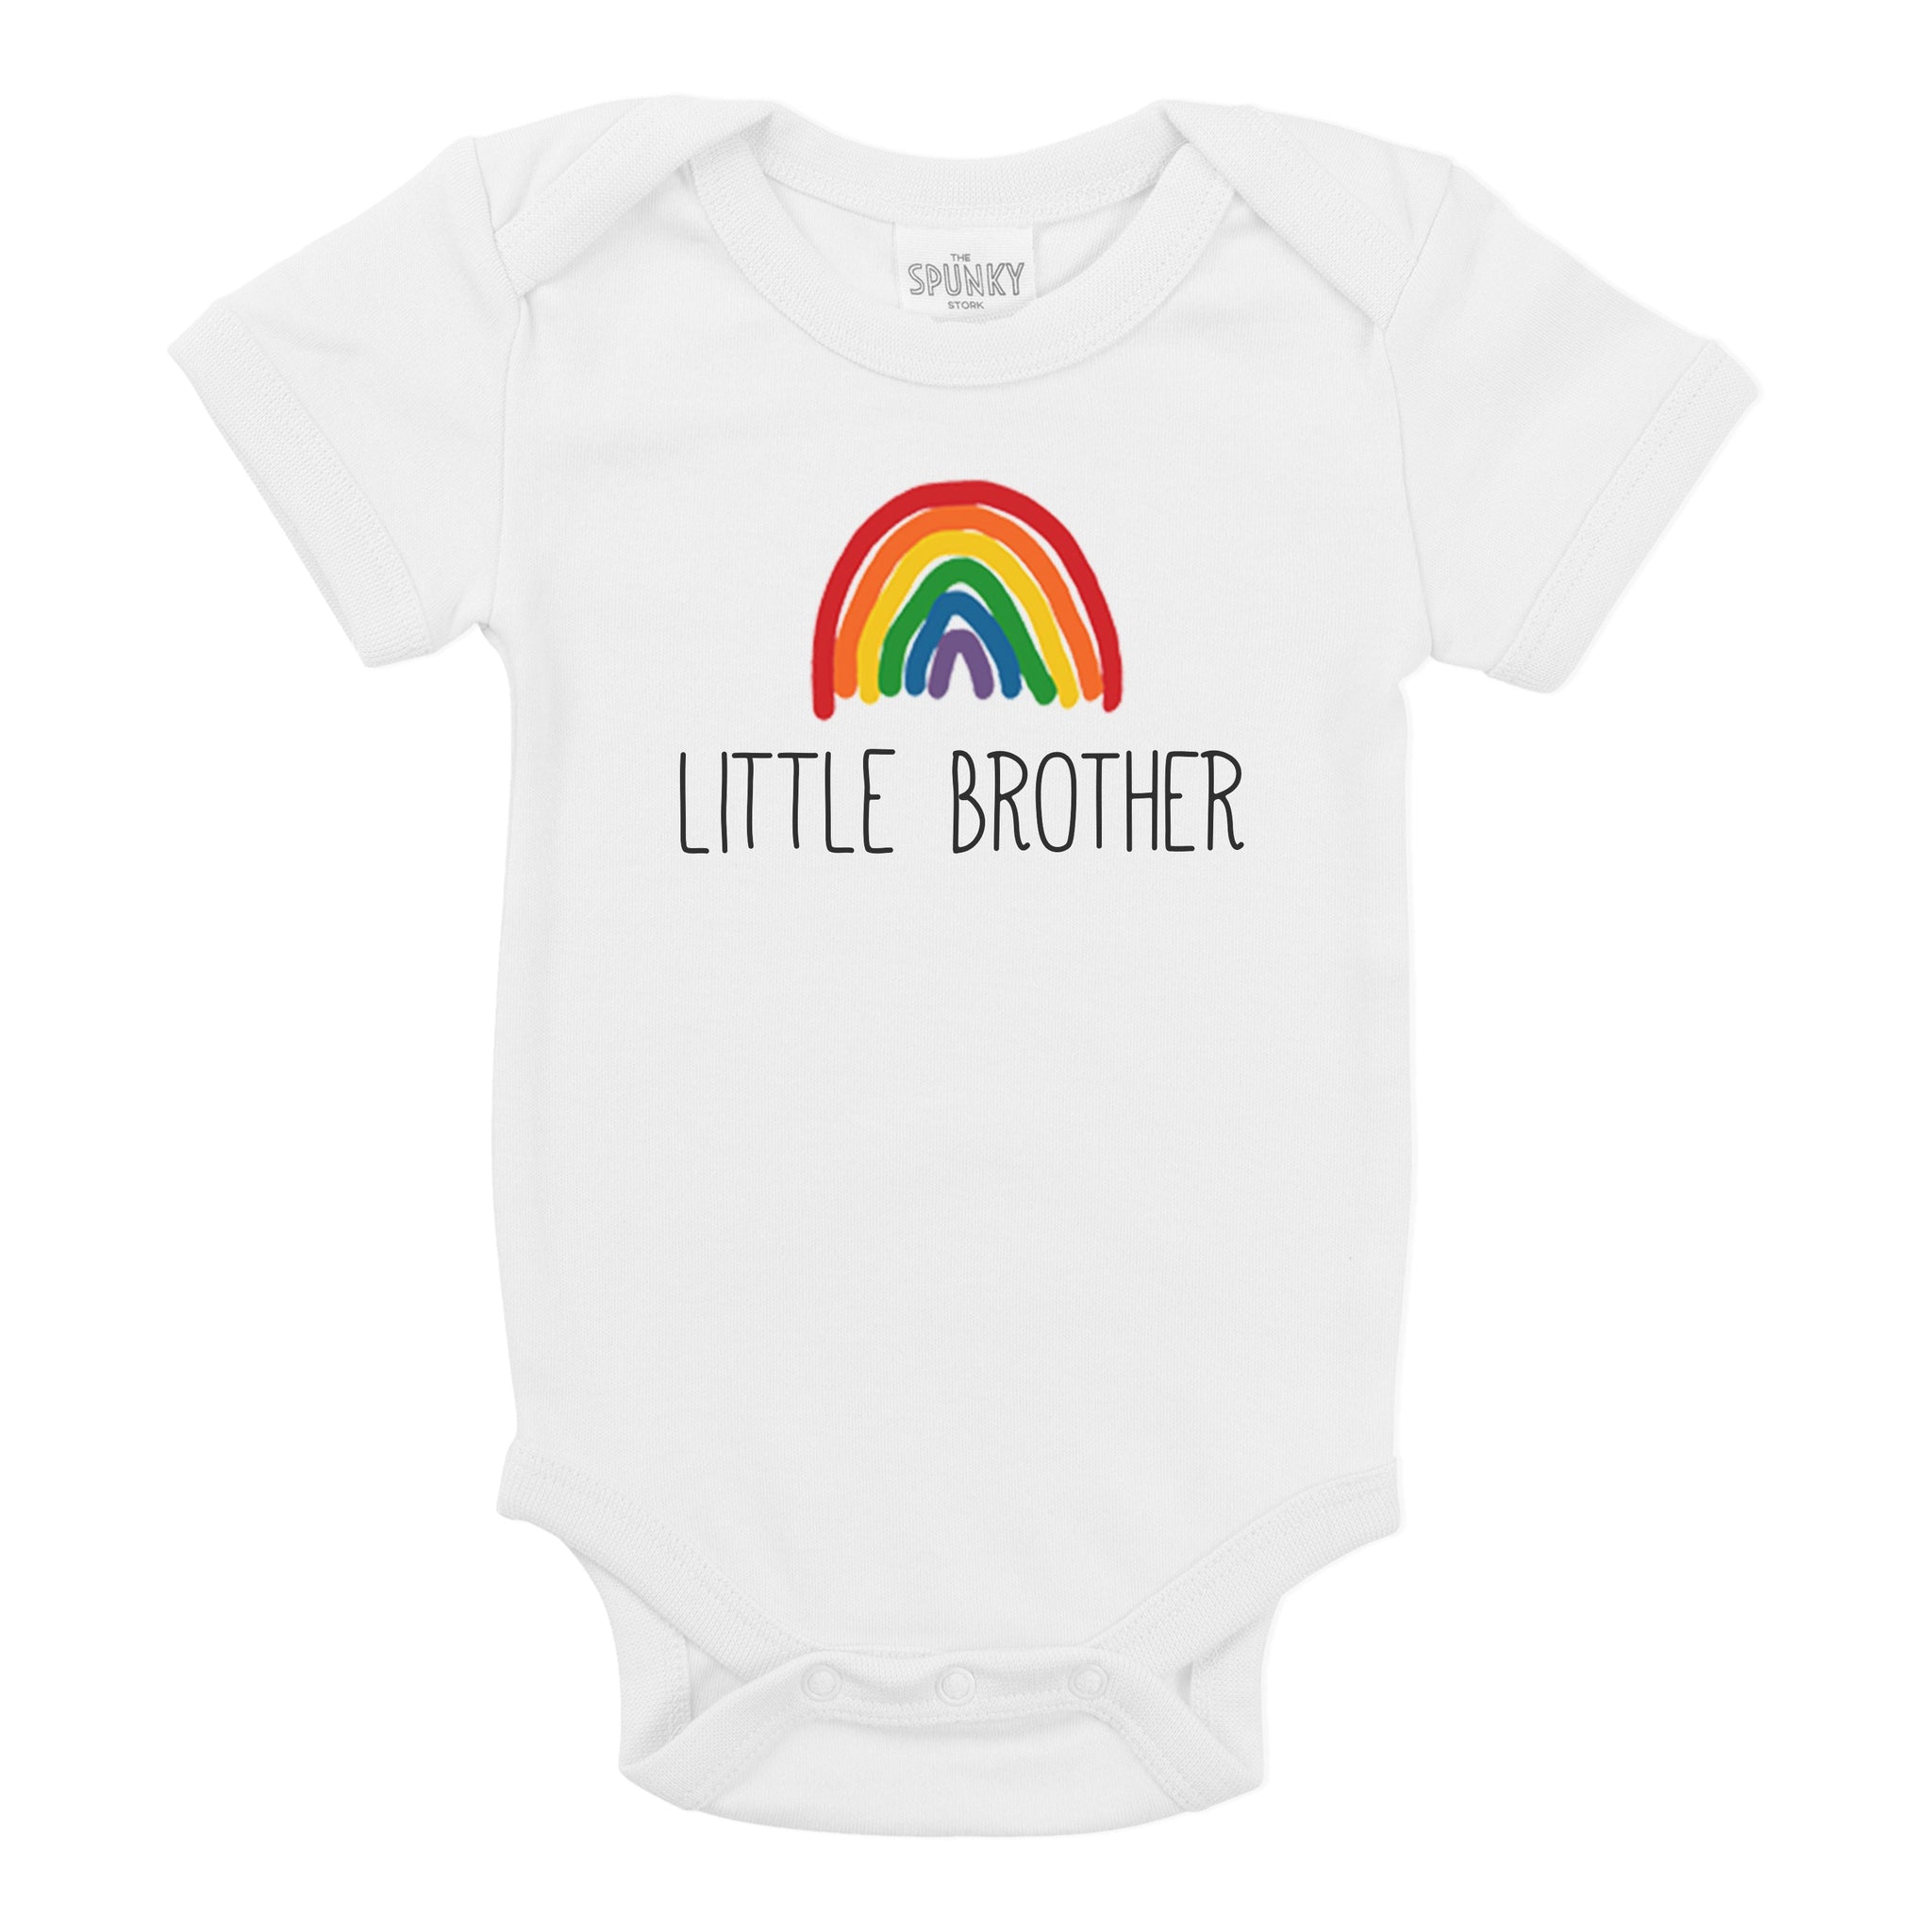 The Spunky Stork - Rainbows Organic Cotton Baby Toddler Siblings Shirt